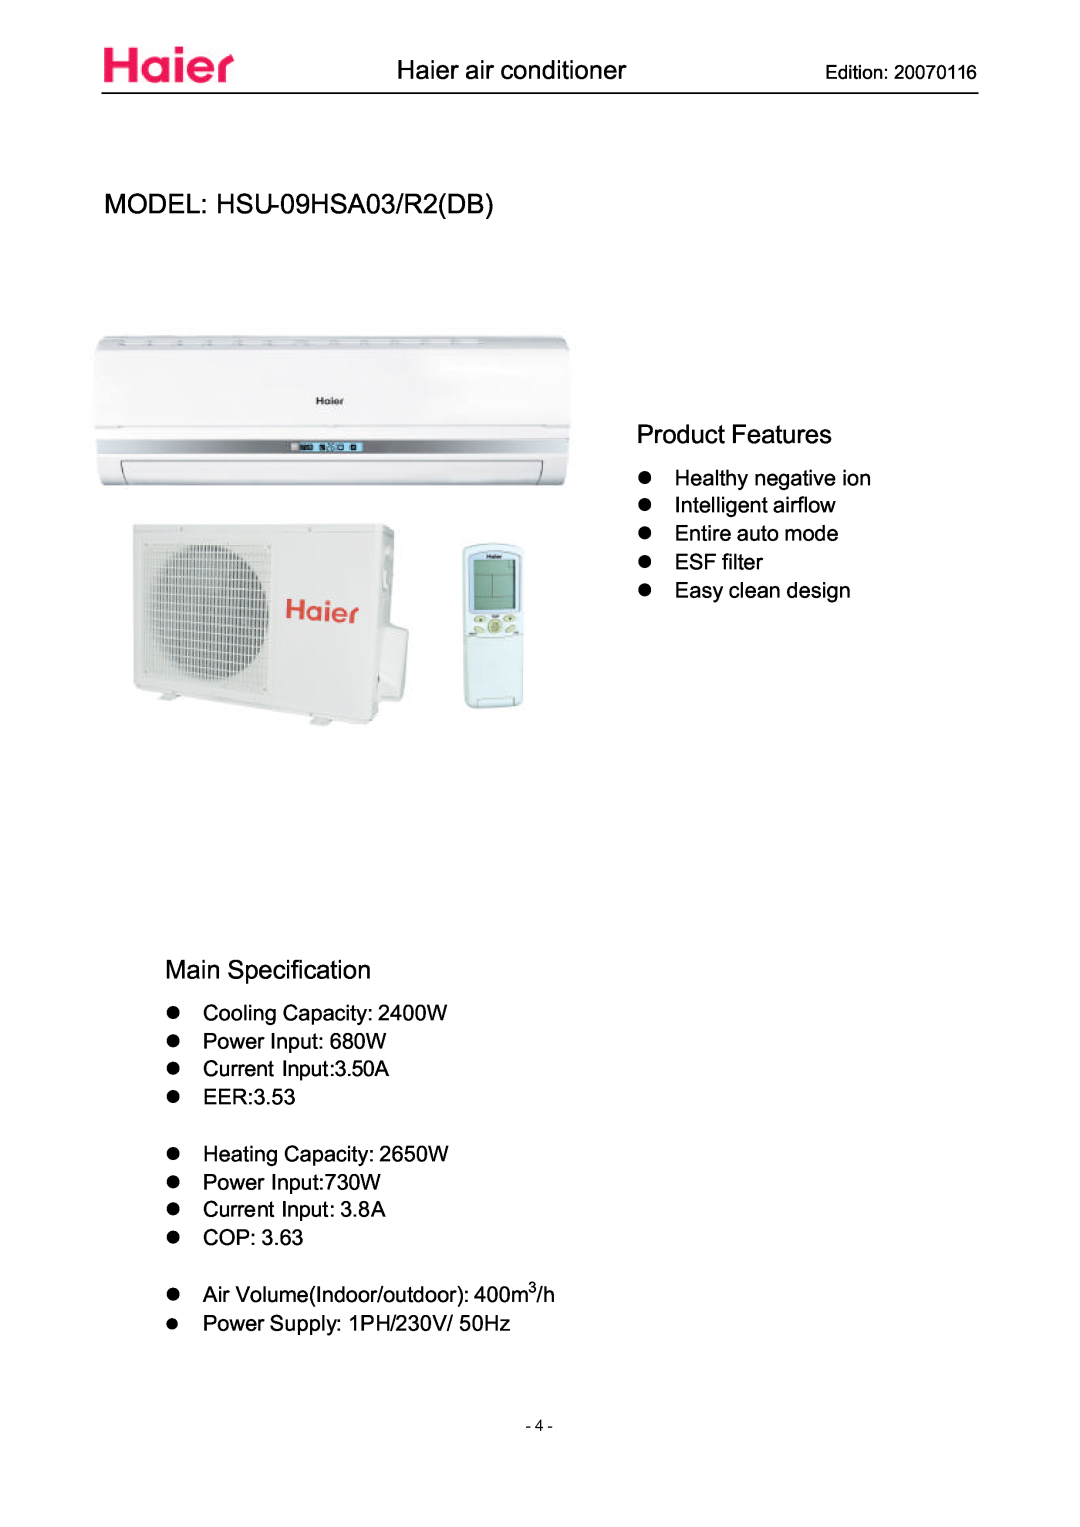 Haier HSU-09HSA03/R2(DB) MODEL: HSU-09HSA03/R2DB, Haier air conditioner, Product Features, Main Specification, Edition 